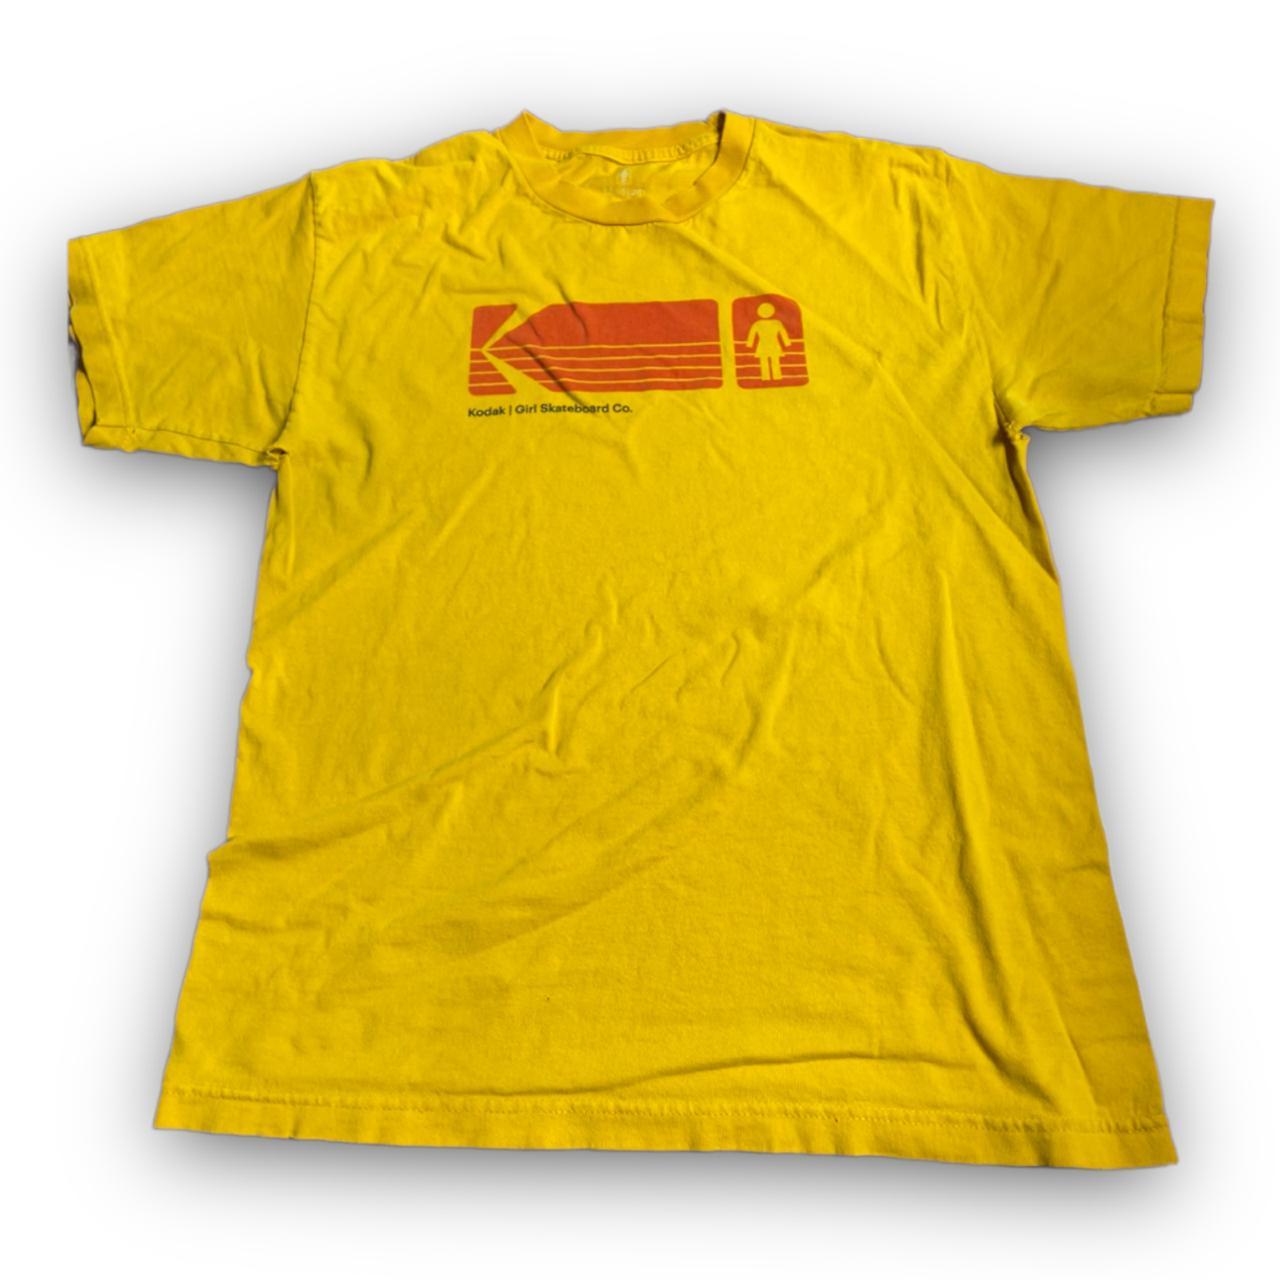 Kodak Men's Yellow T-shirt